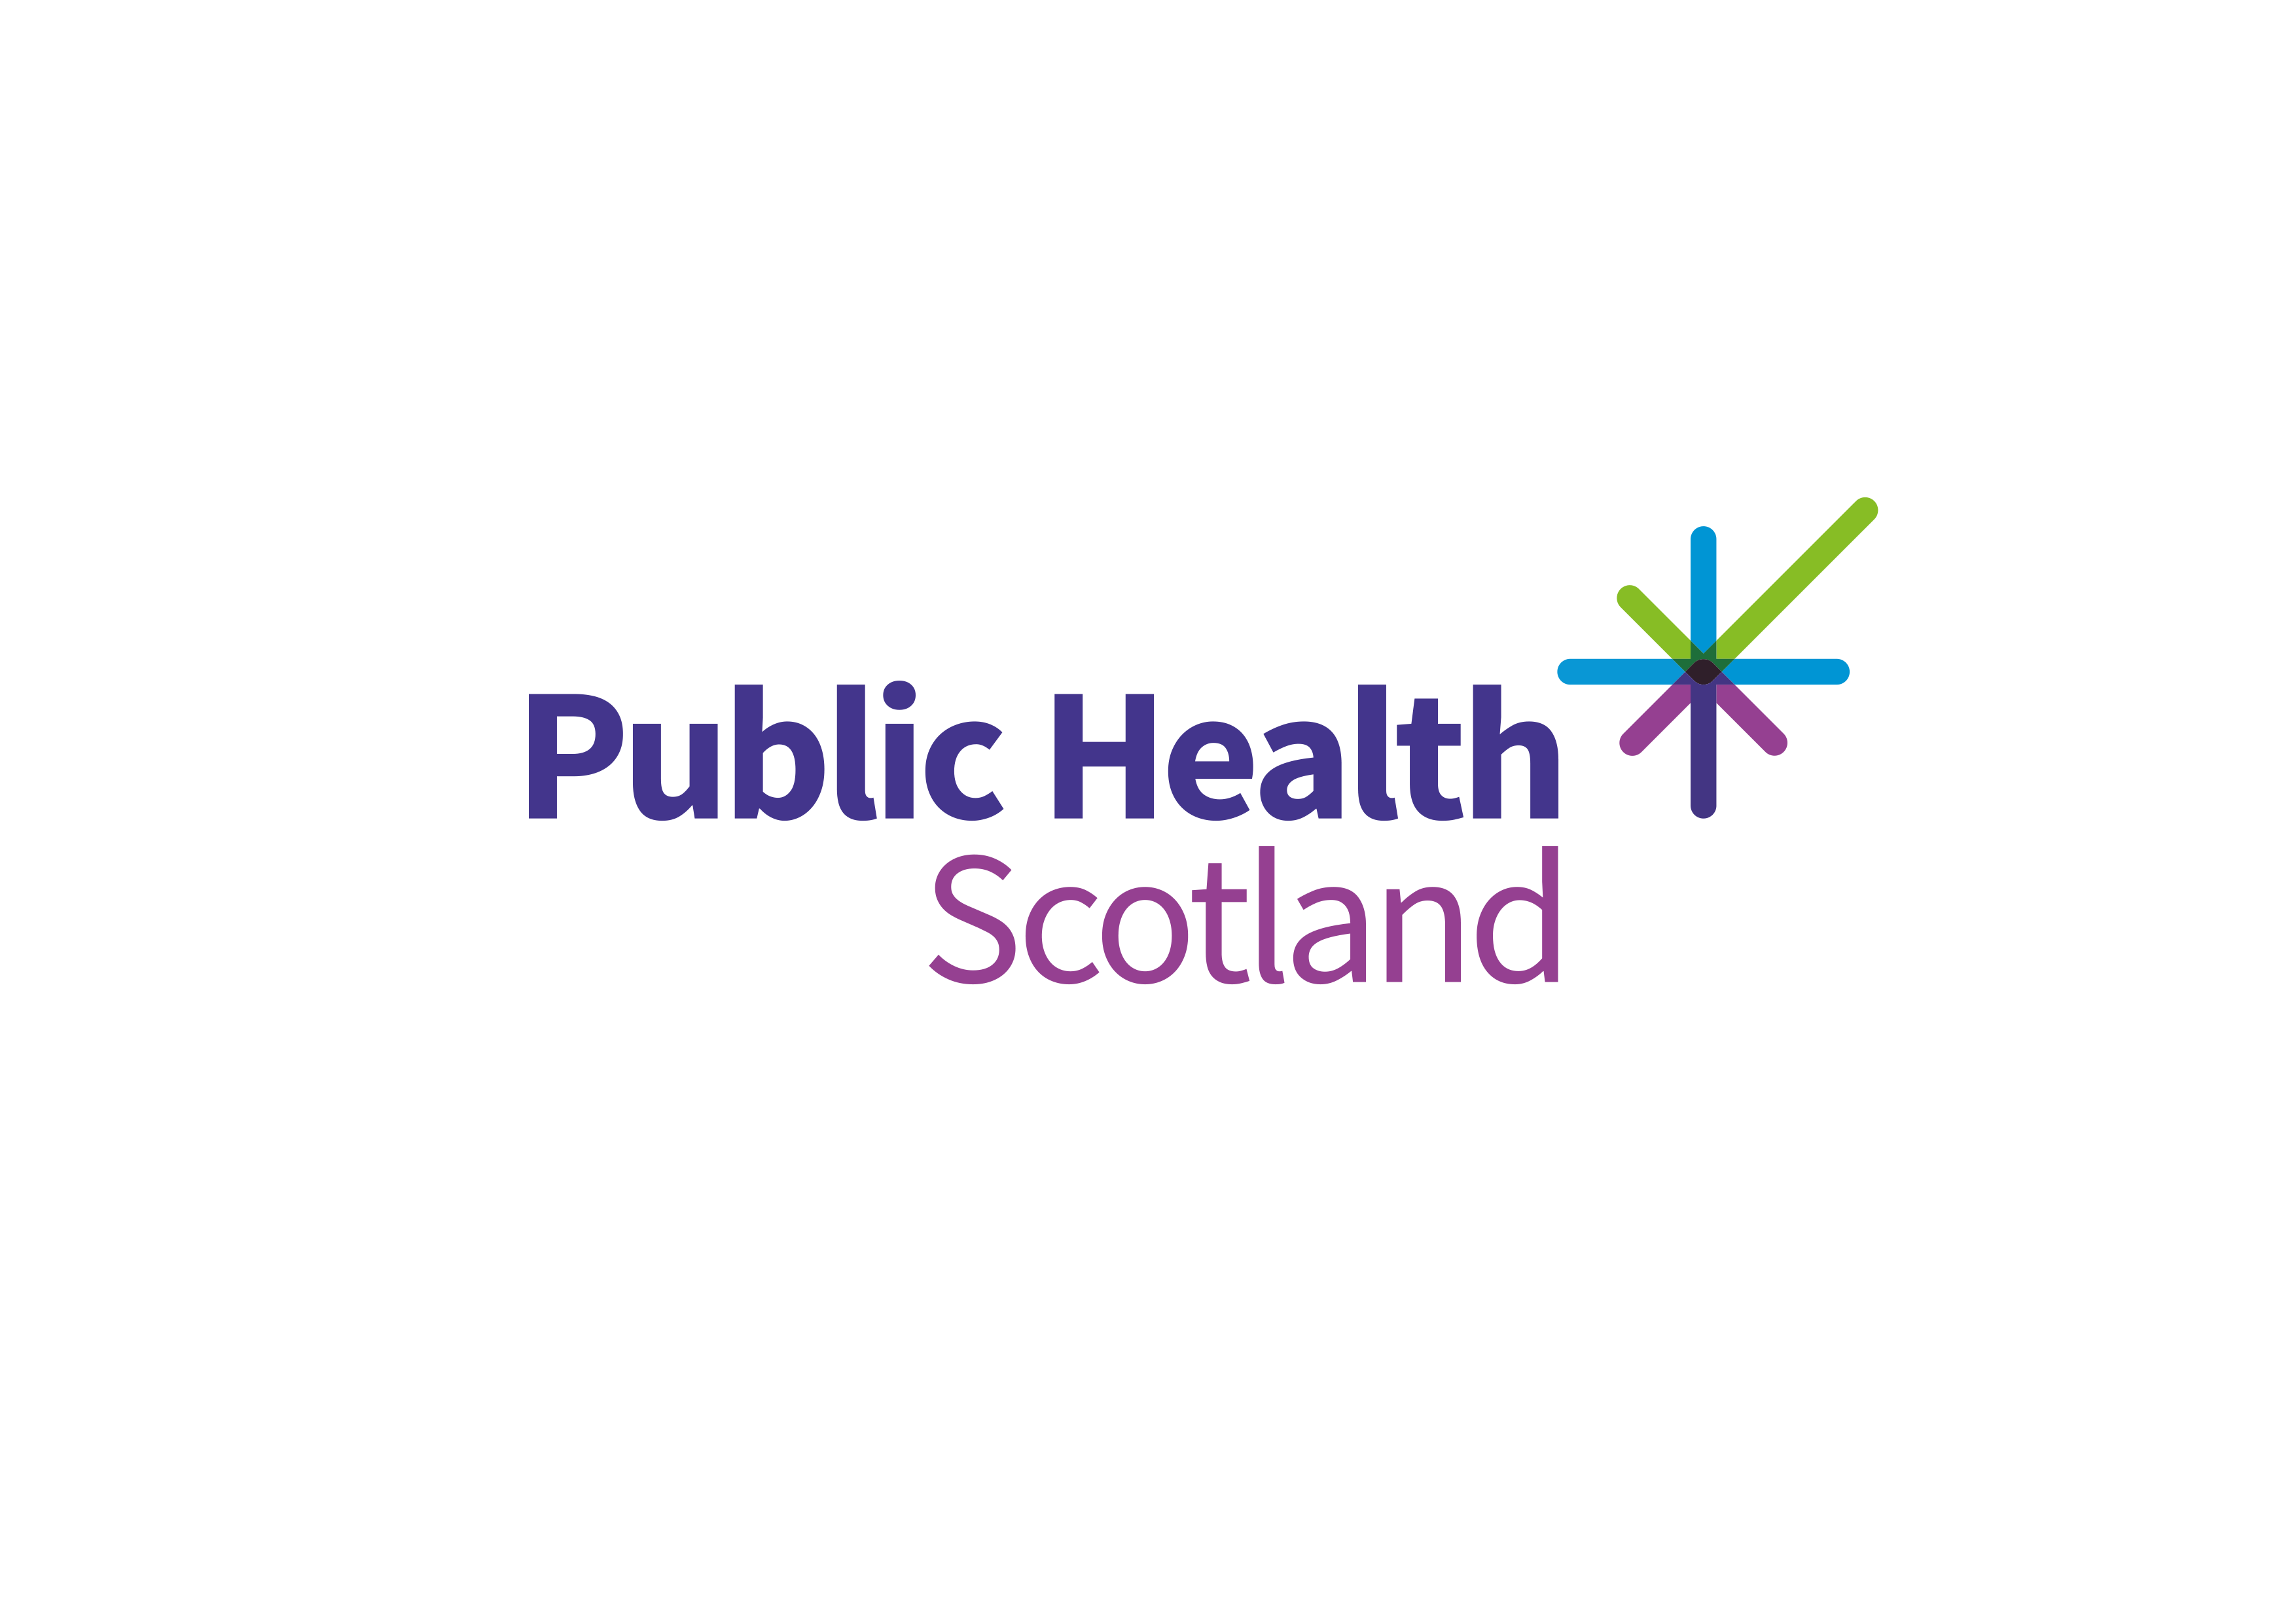 Public Health Scotland logo